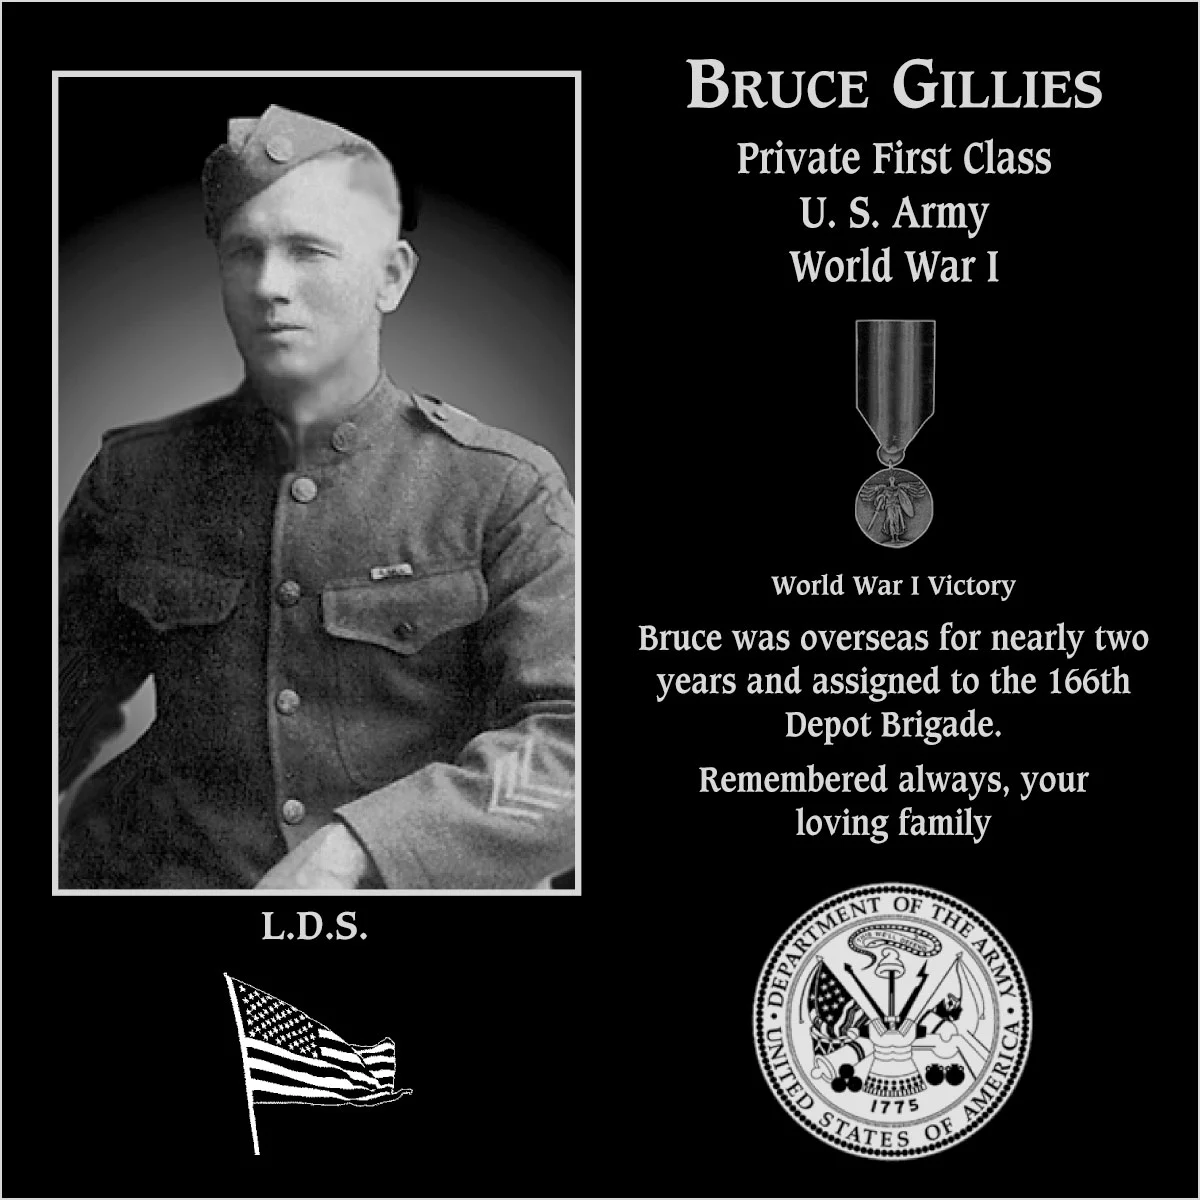 Bruce Gillies